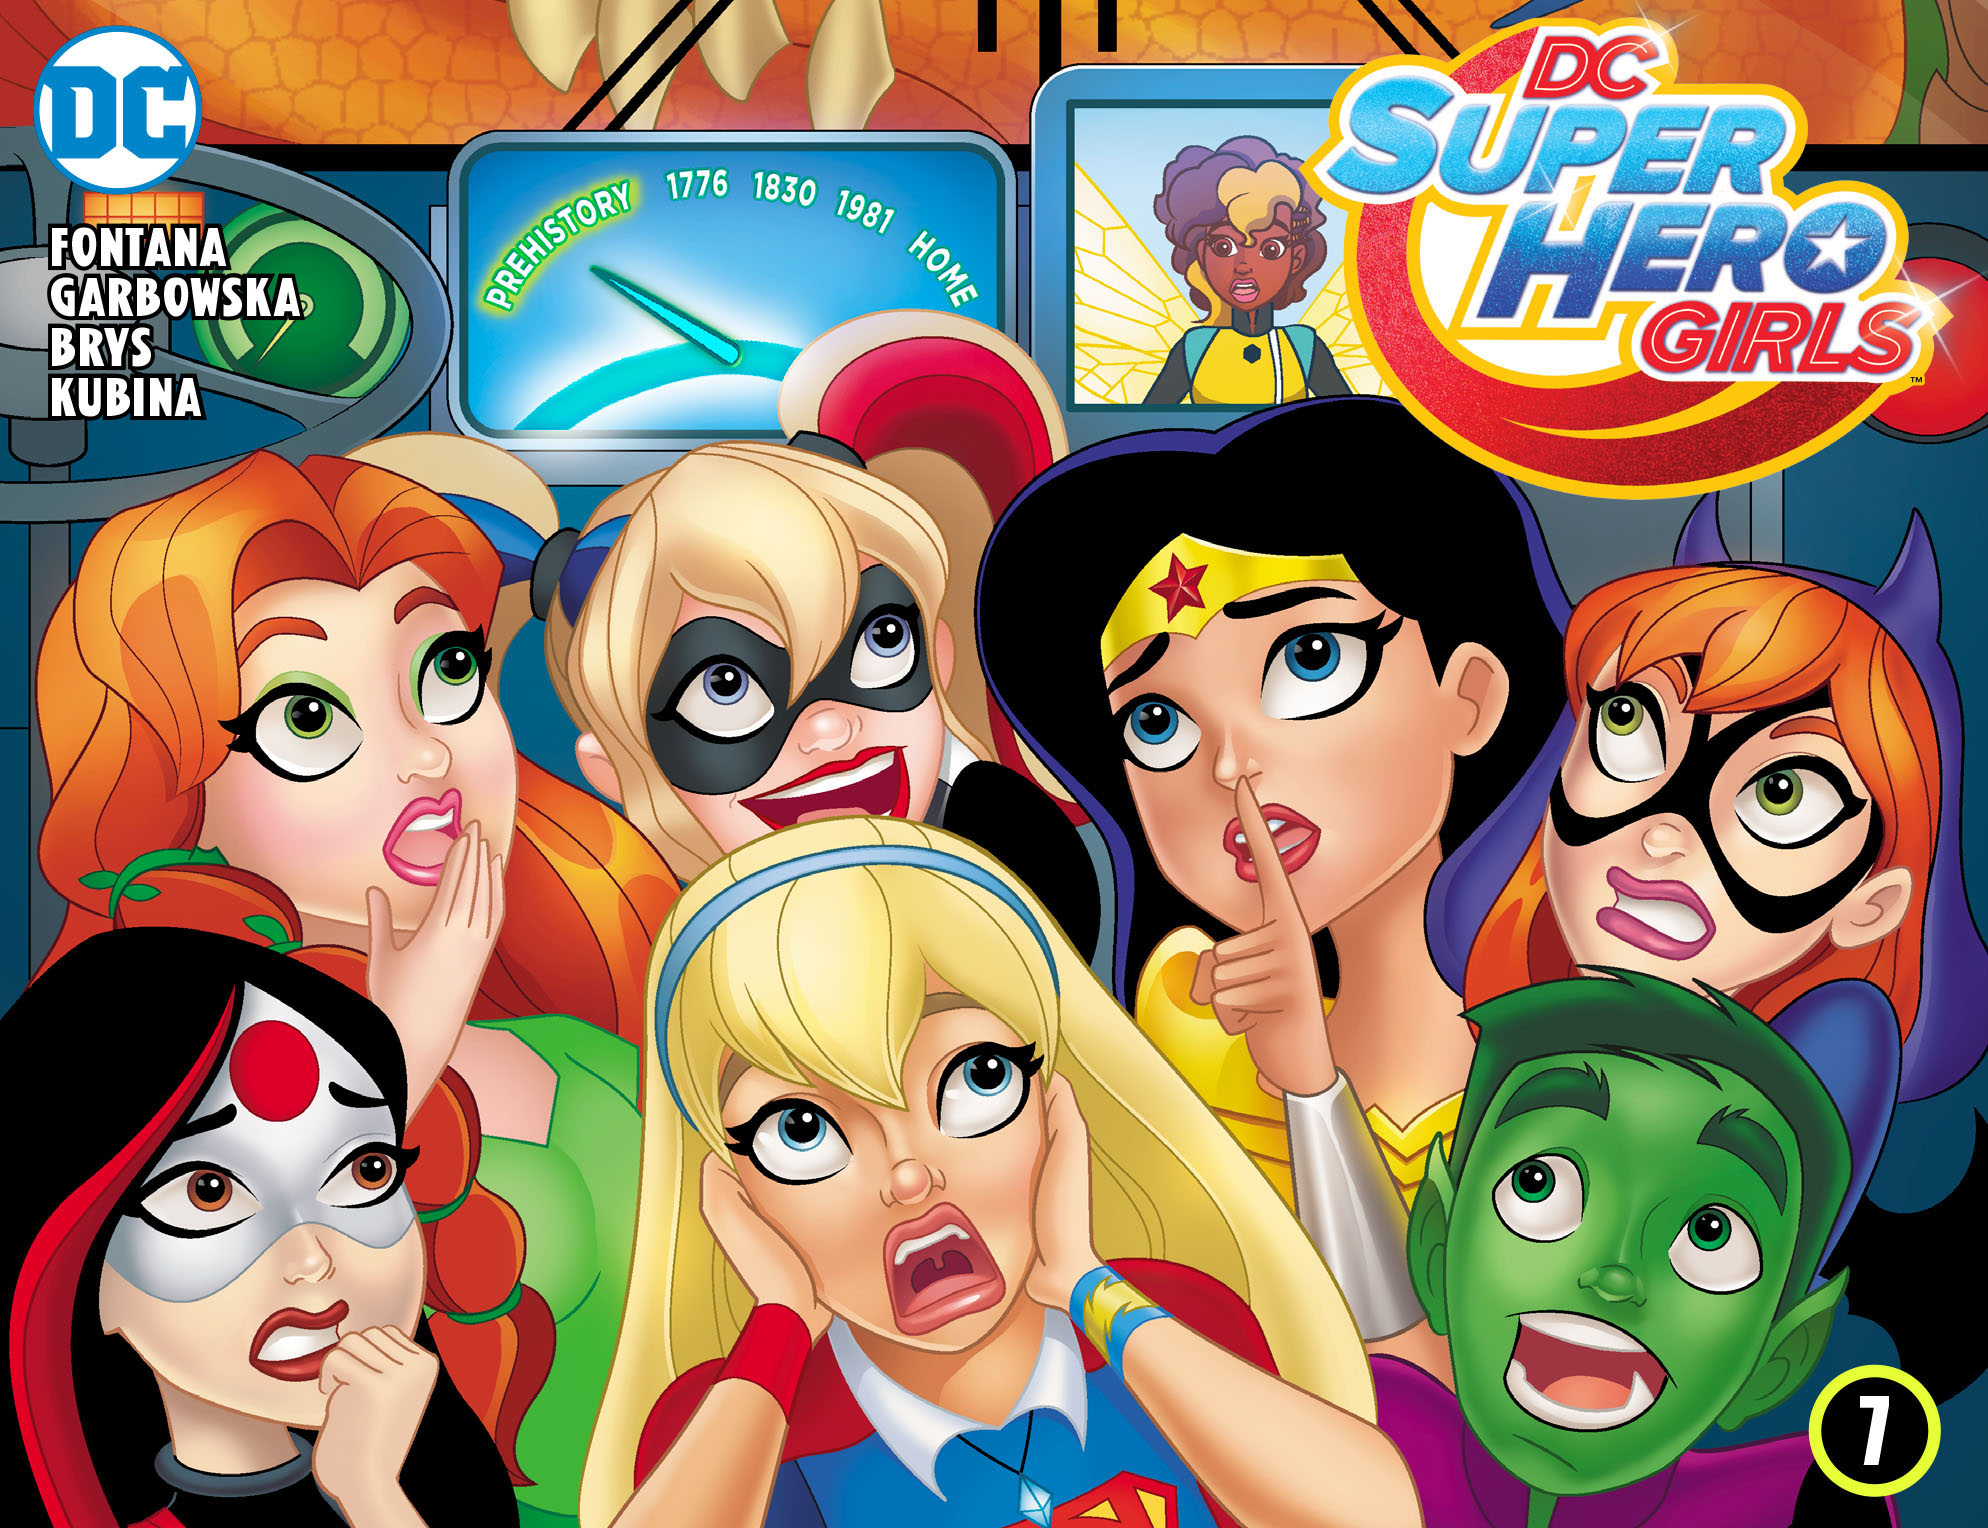 DC Super Hero Girls FCBD 2017 Special Edition #1 preview images